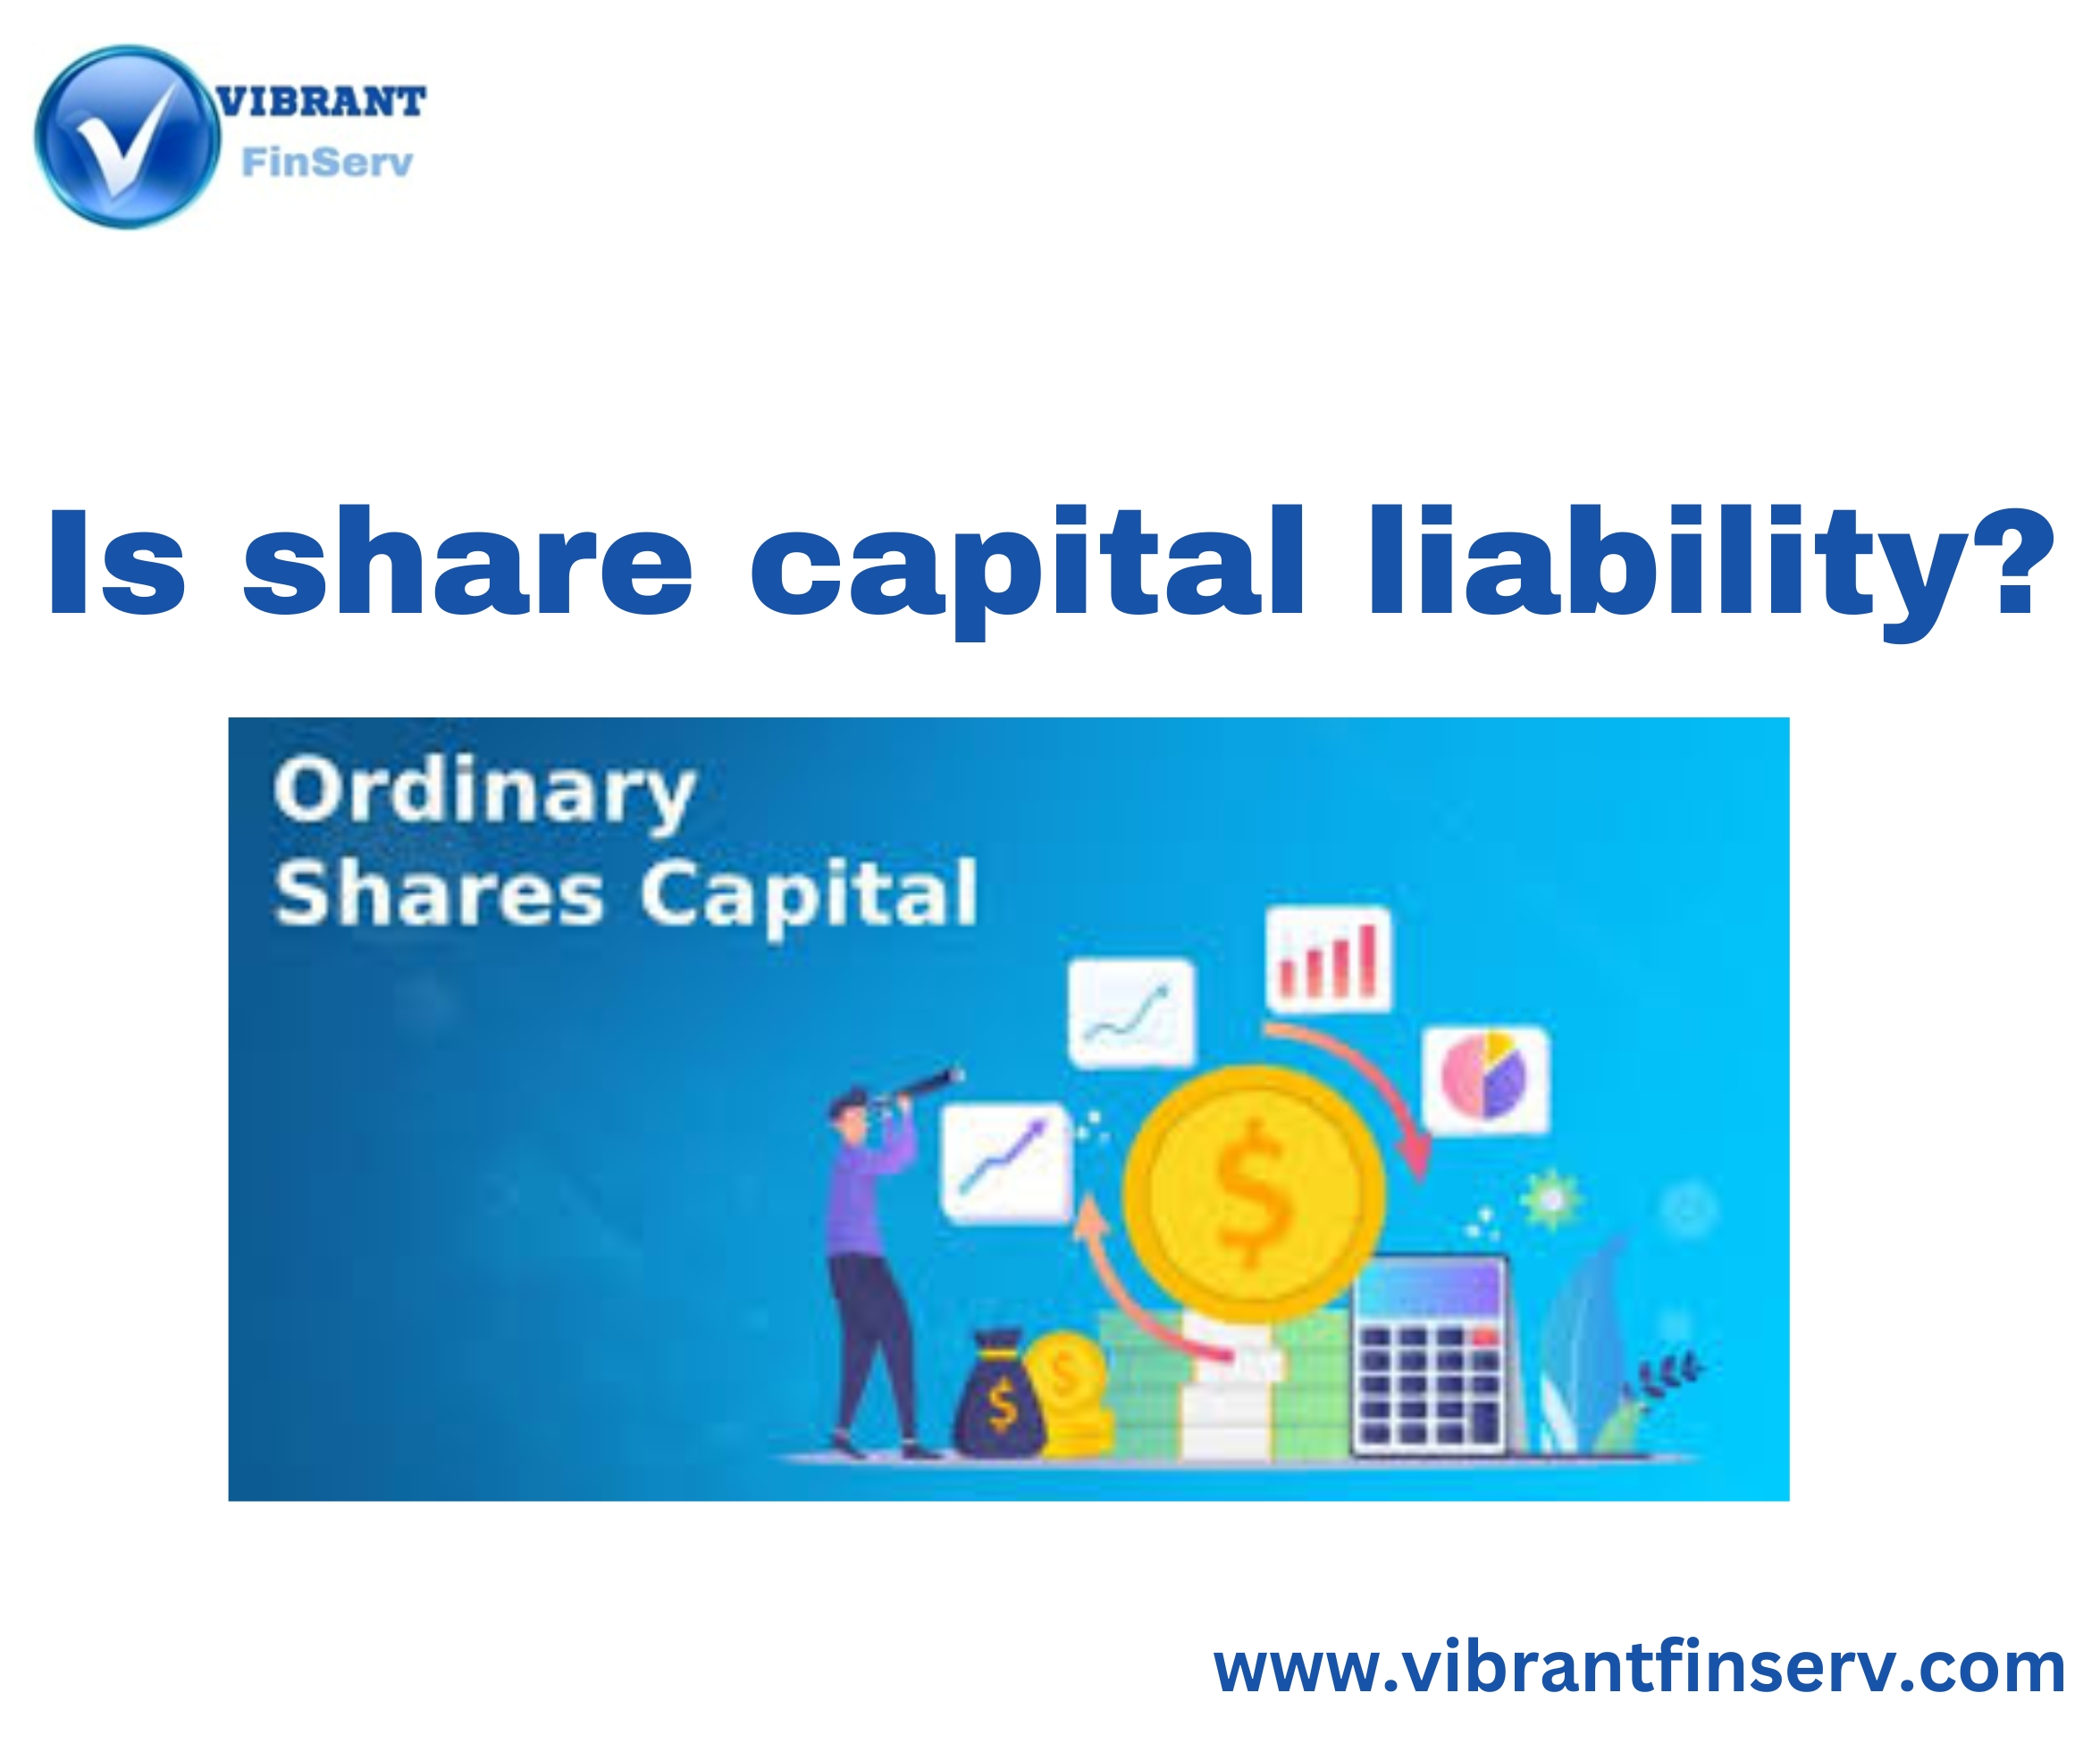 Share Capital Liability